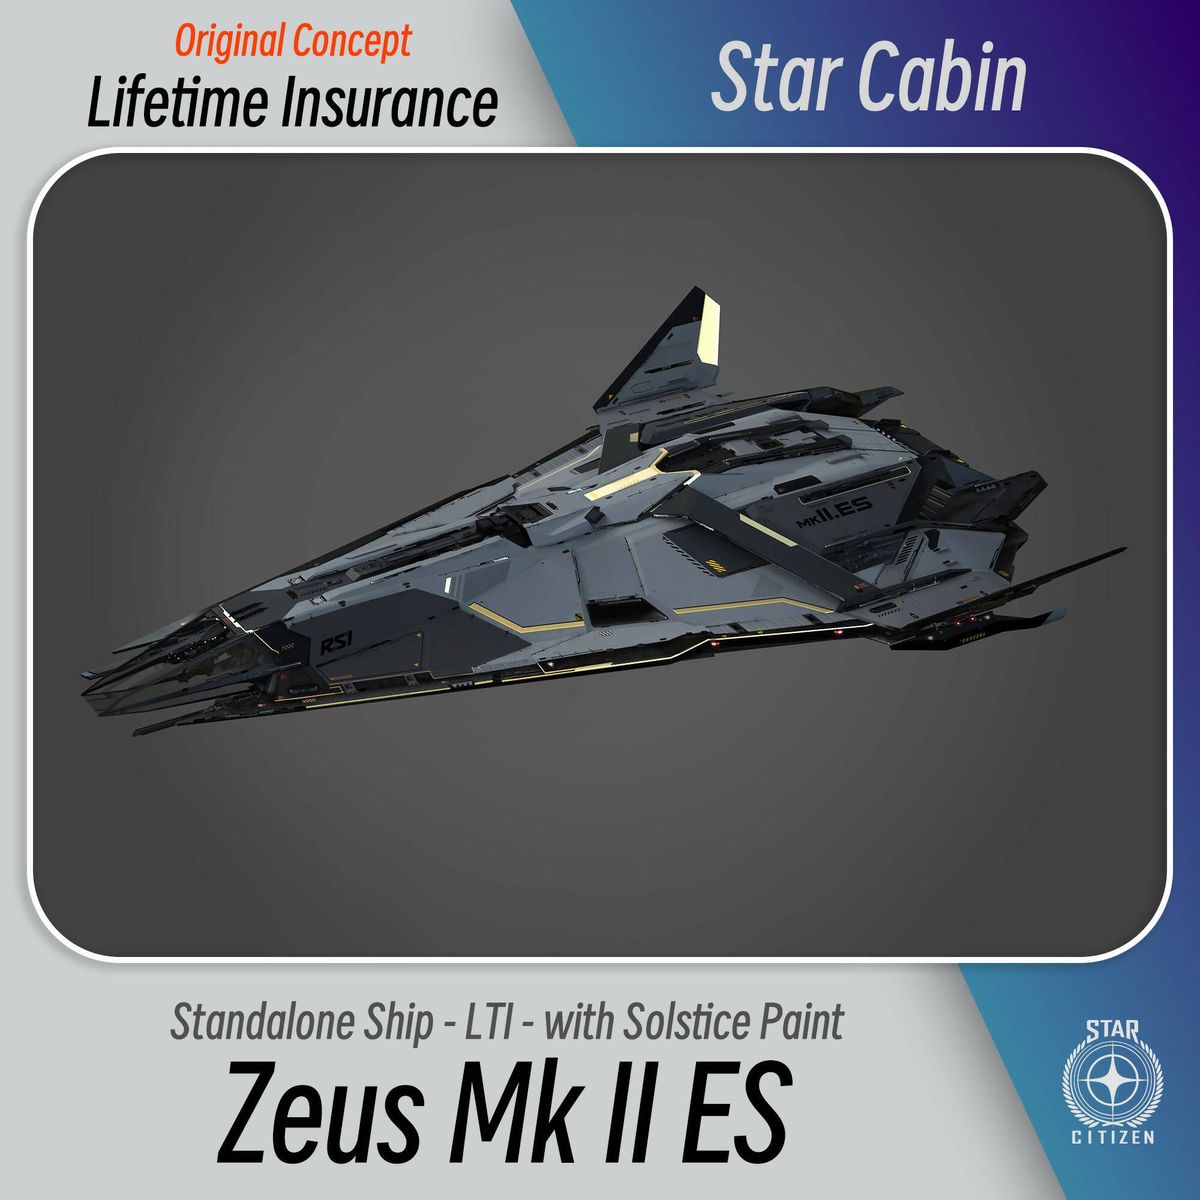 Zeus Mk II ES with Solstice Paint - LTI - OC